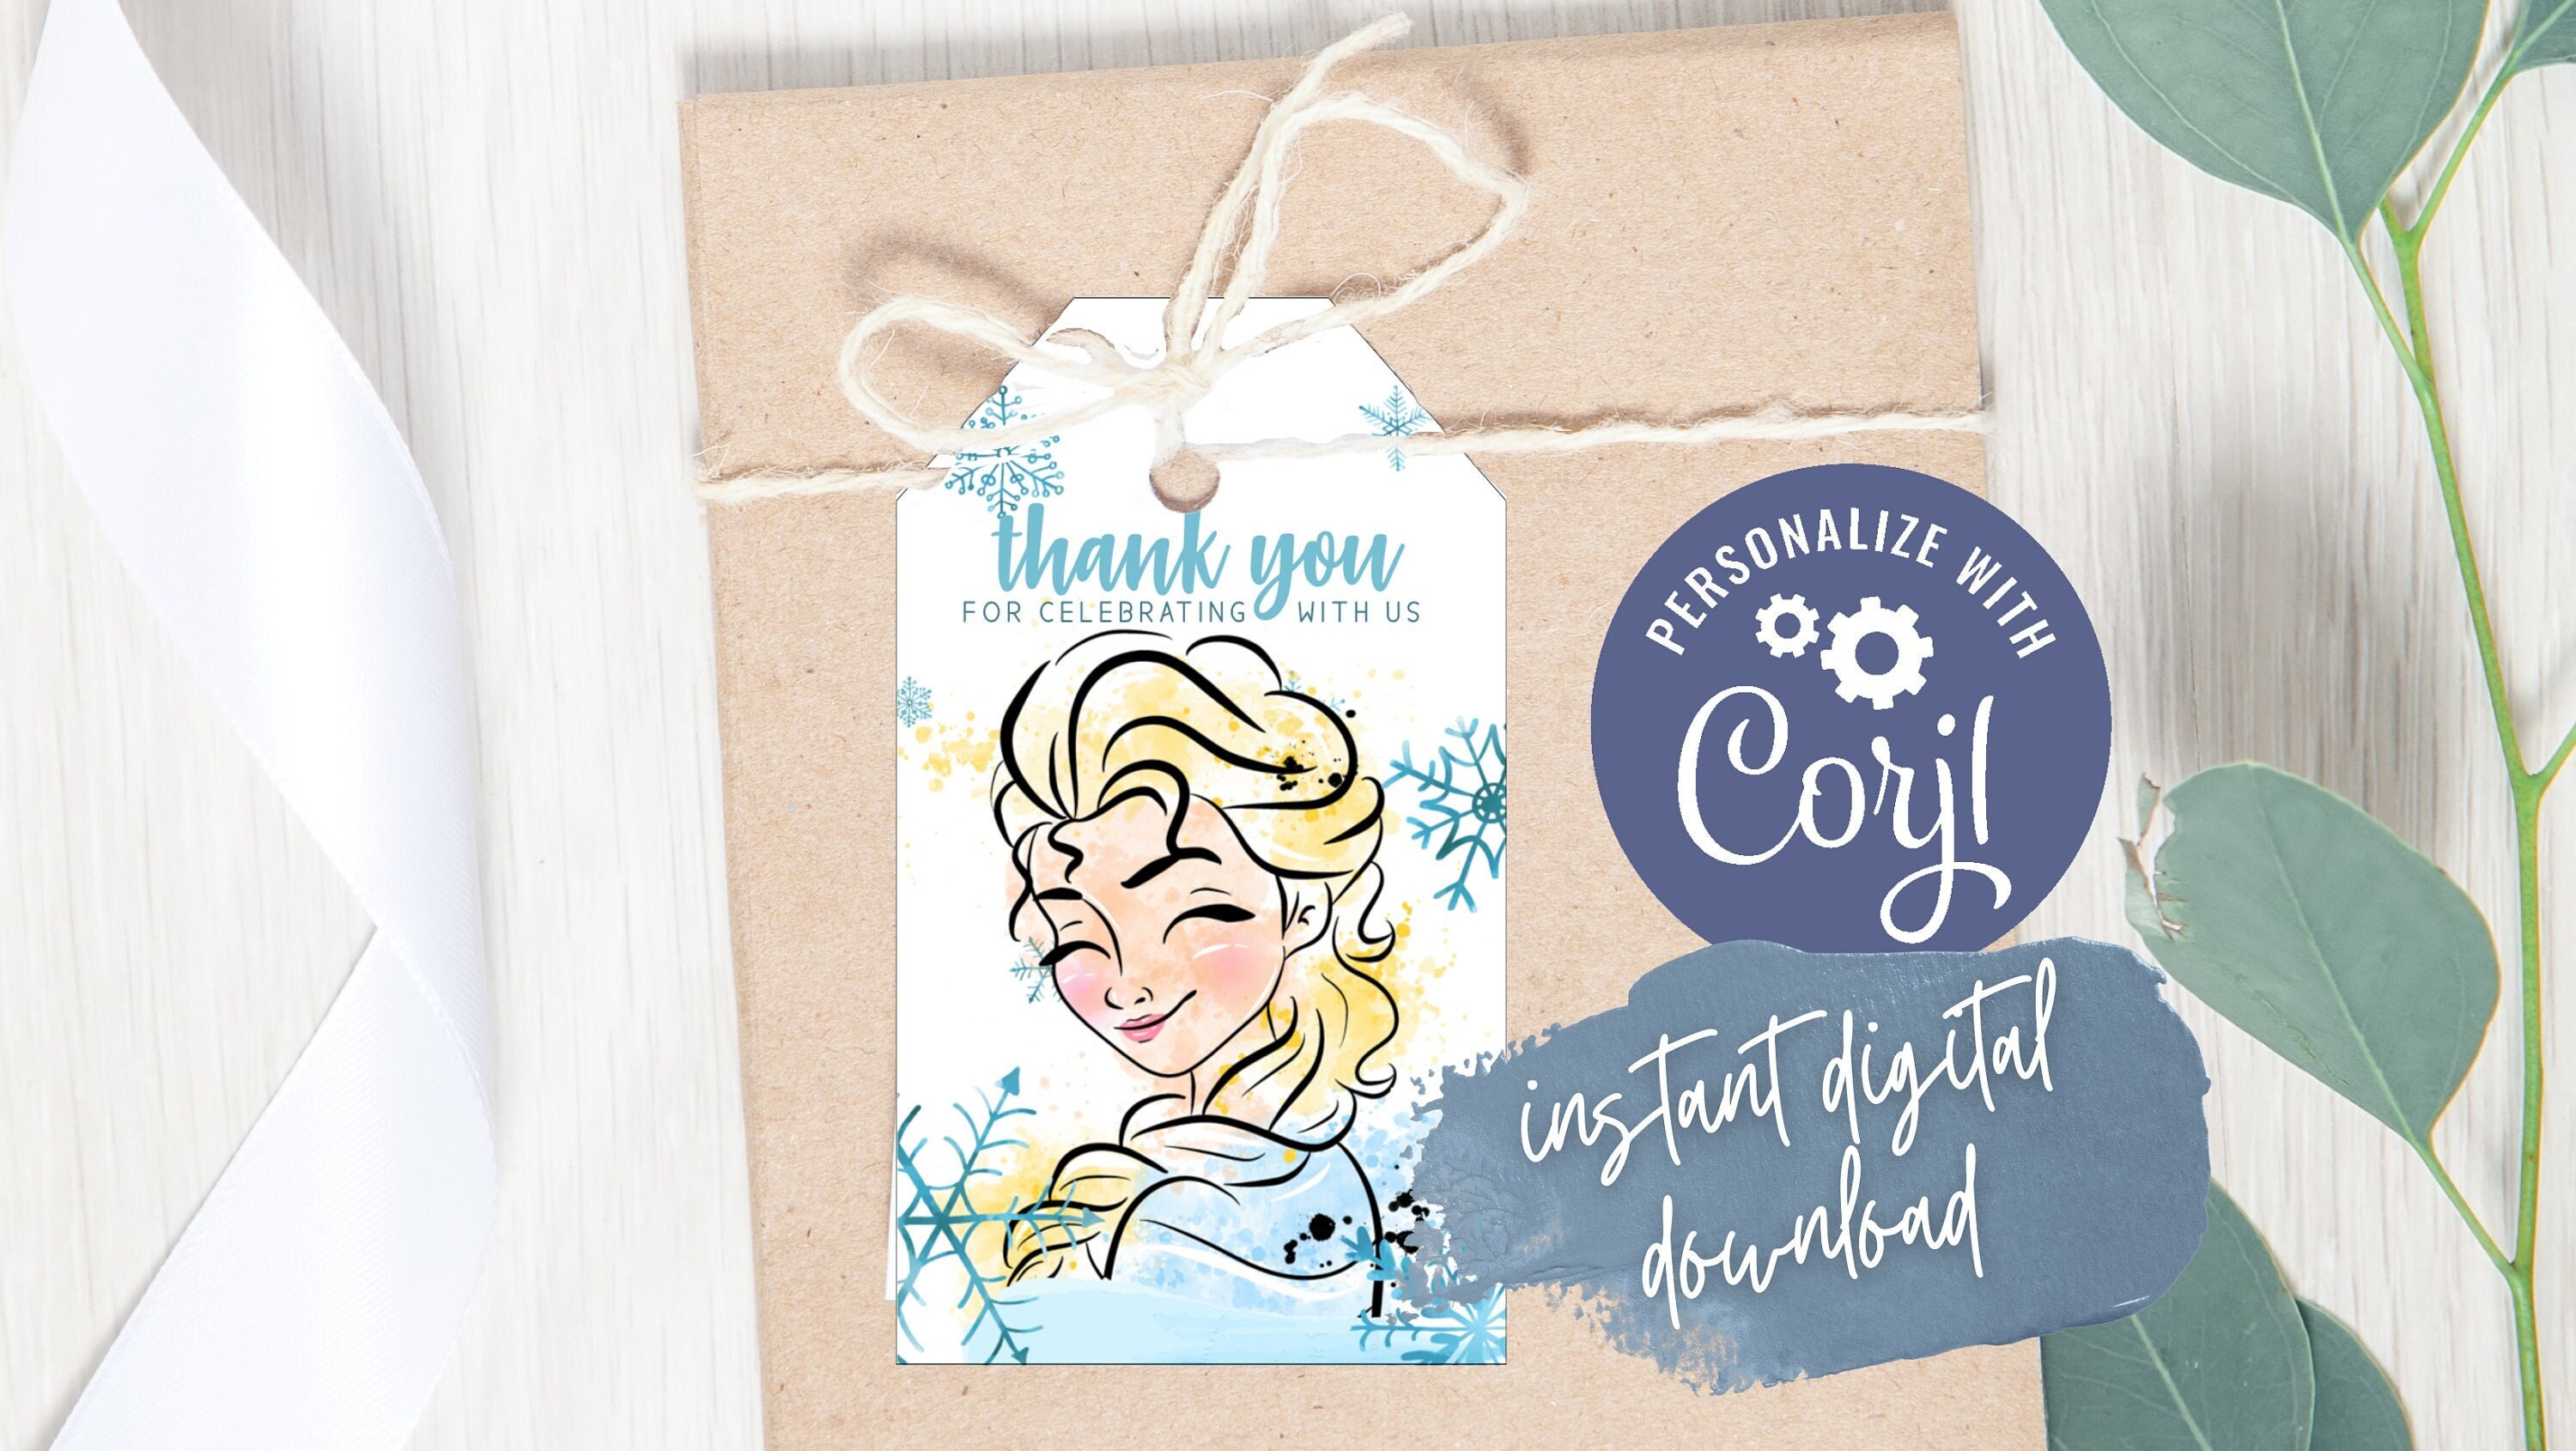 Winrayk 112Pcs Frozen Party Favors Elsa Birthday Supplies for Girls Kids,  Gift Bag Stamper Slap Bracelet Keychain Snowflake Ring Sticker Pinata  Filler